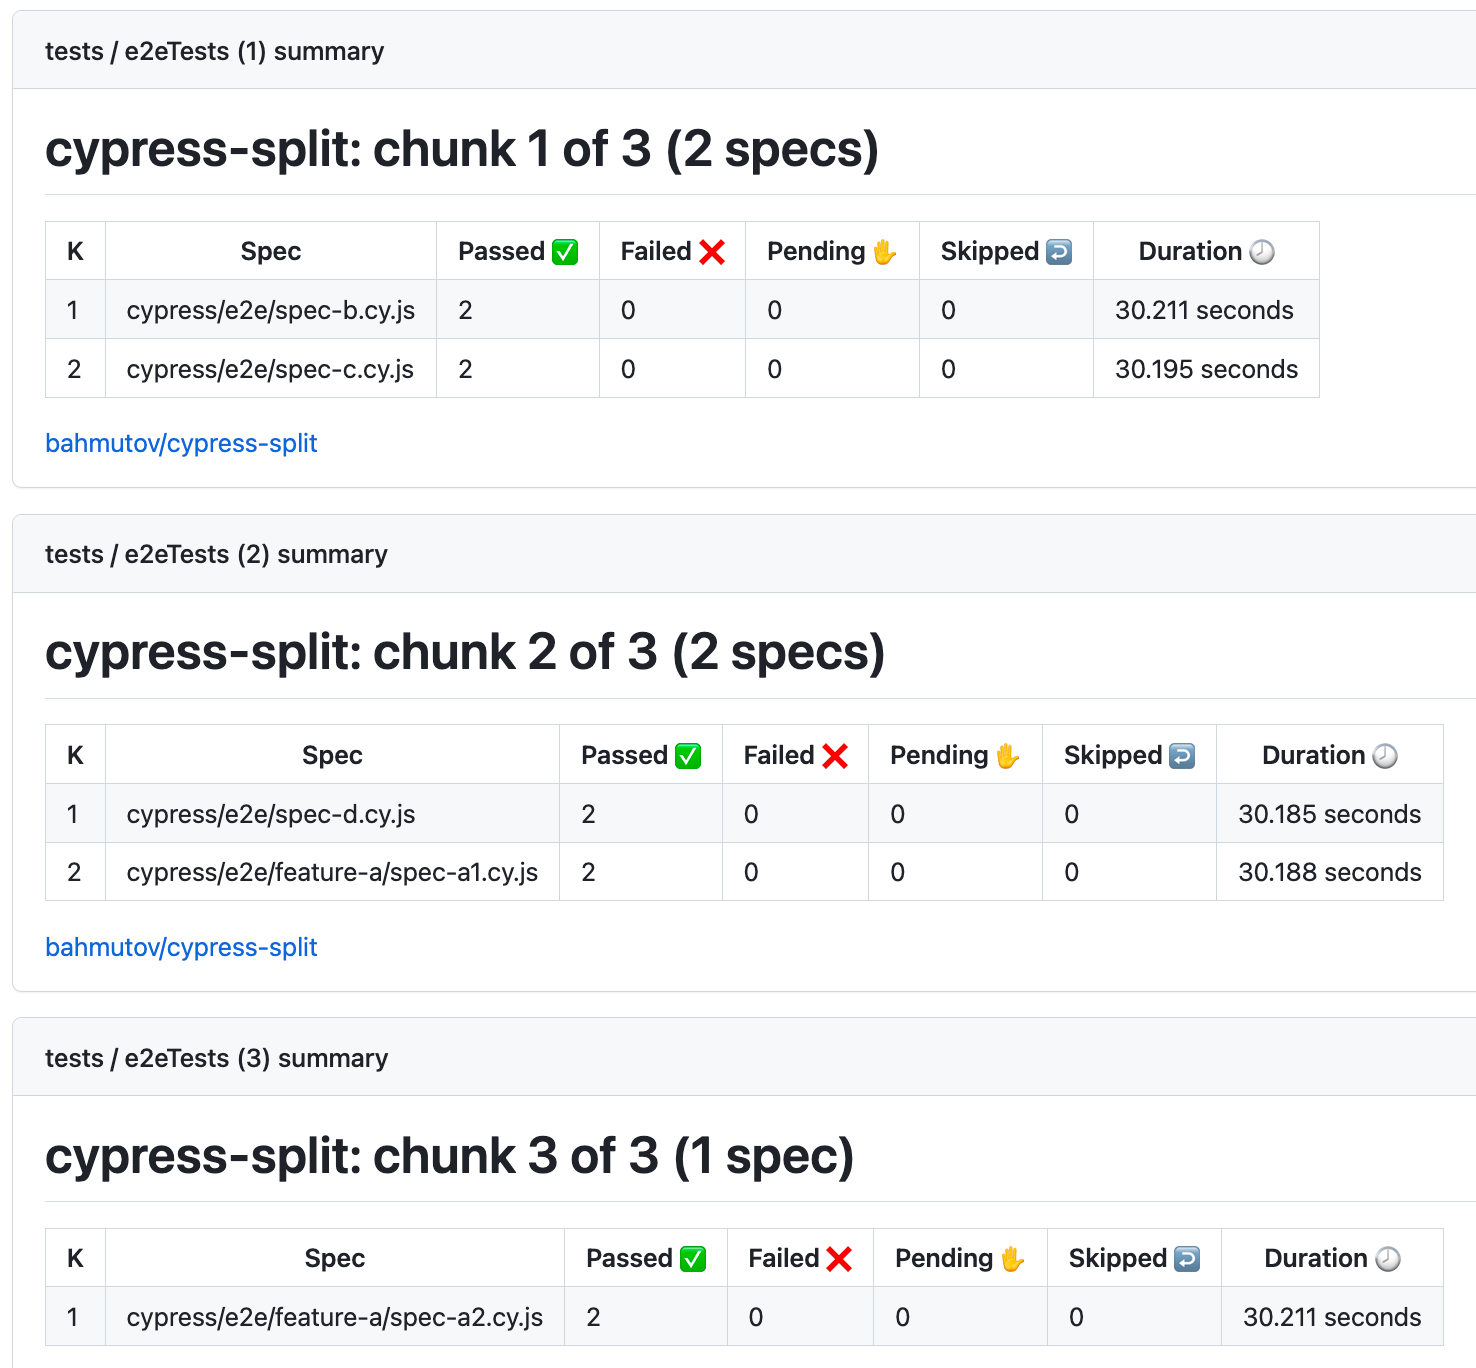 Cypress-split summary for each machine